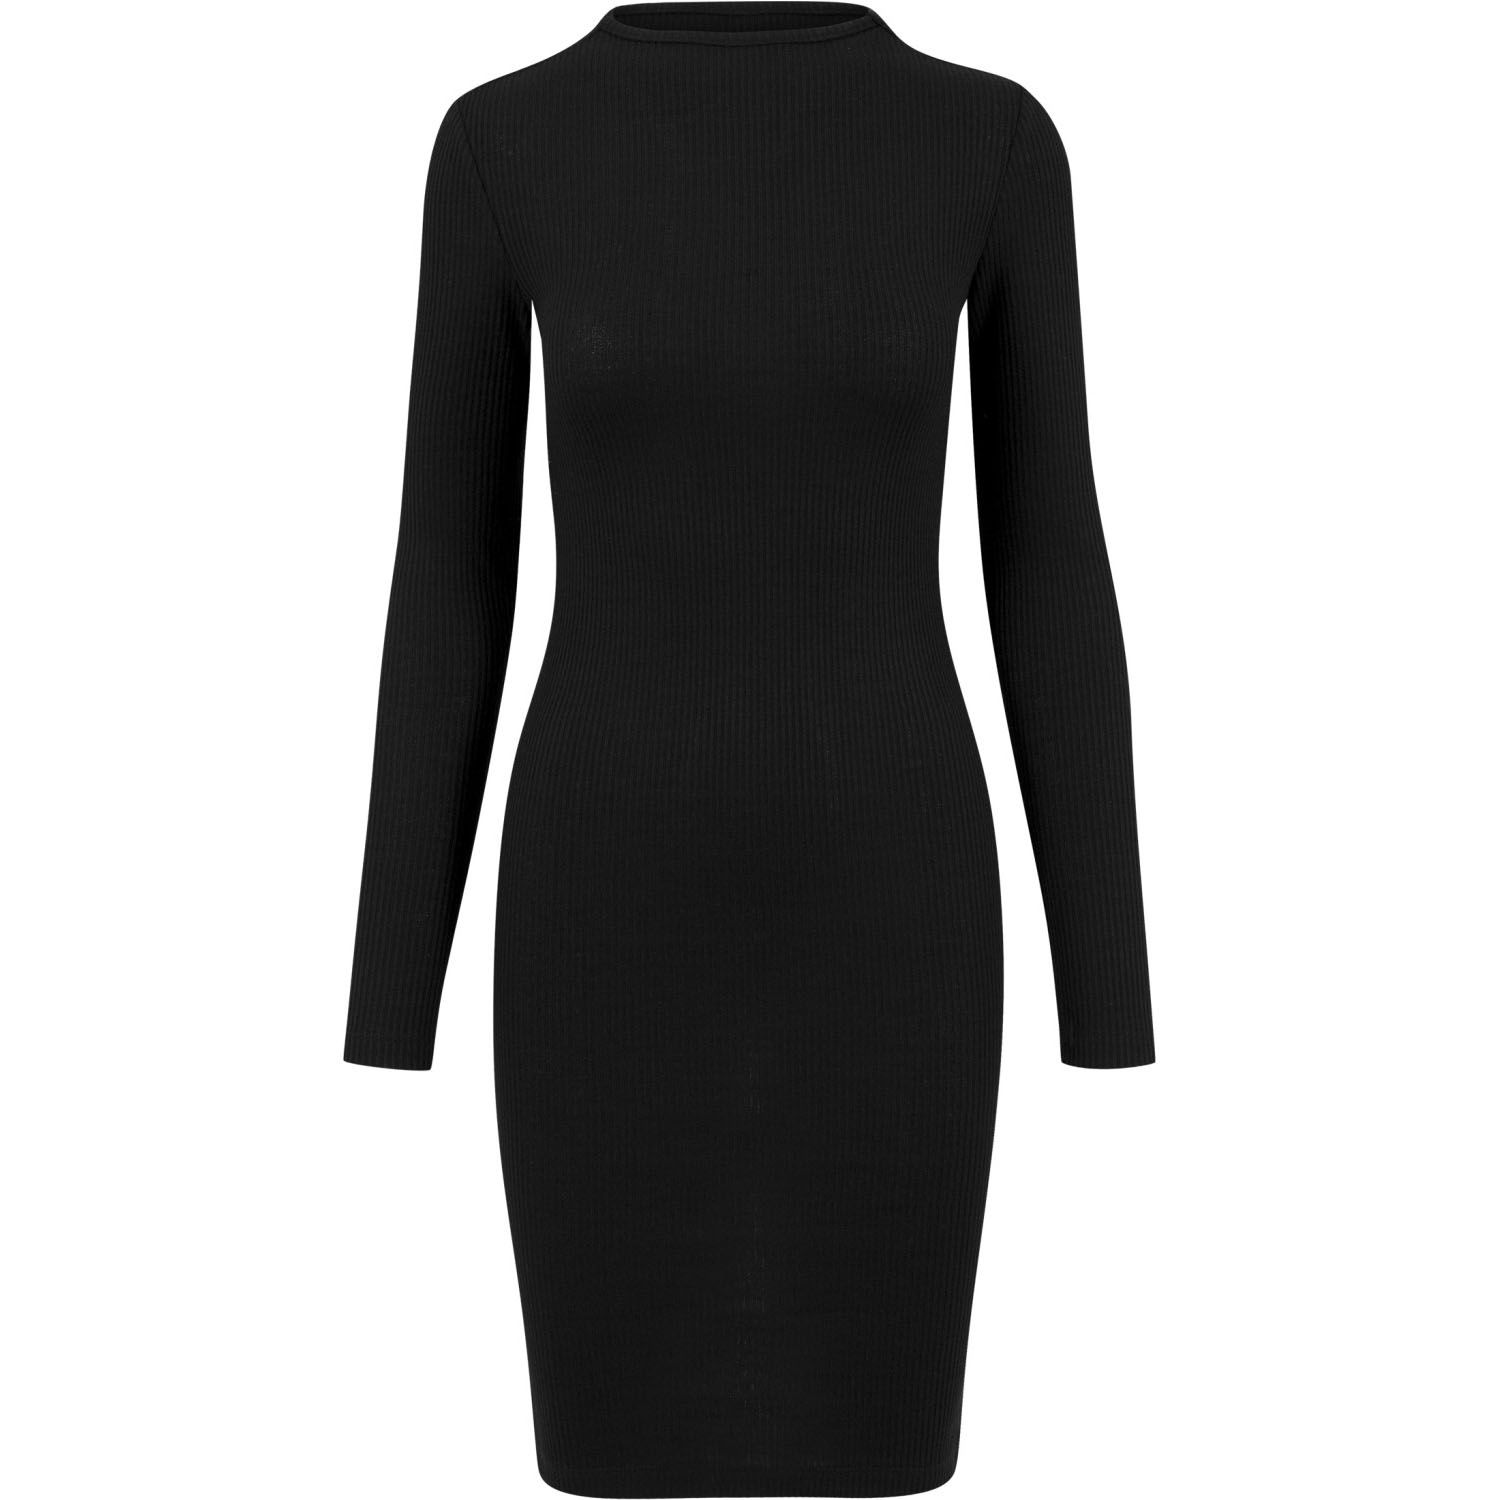 Buy Urban Classics Ladies - RIB JERSEY Dress black